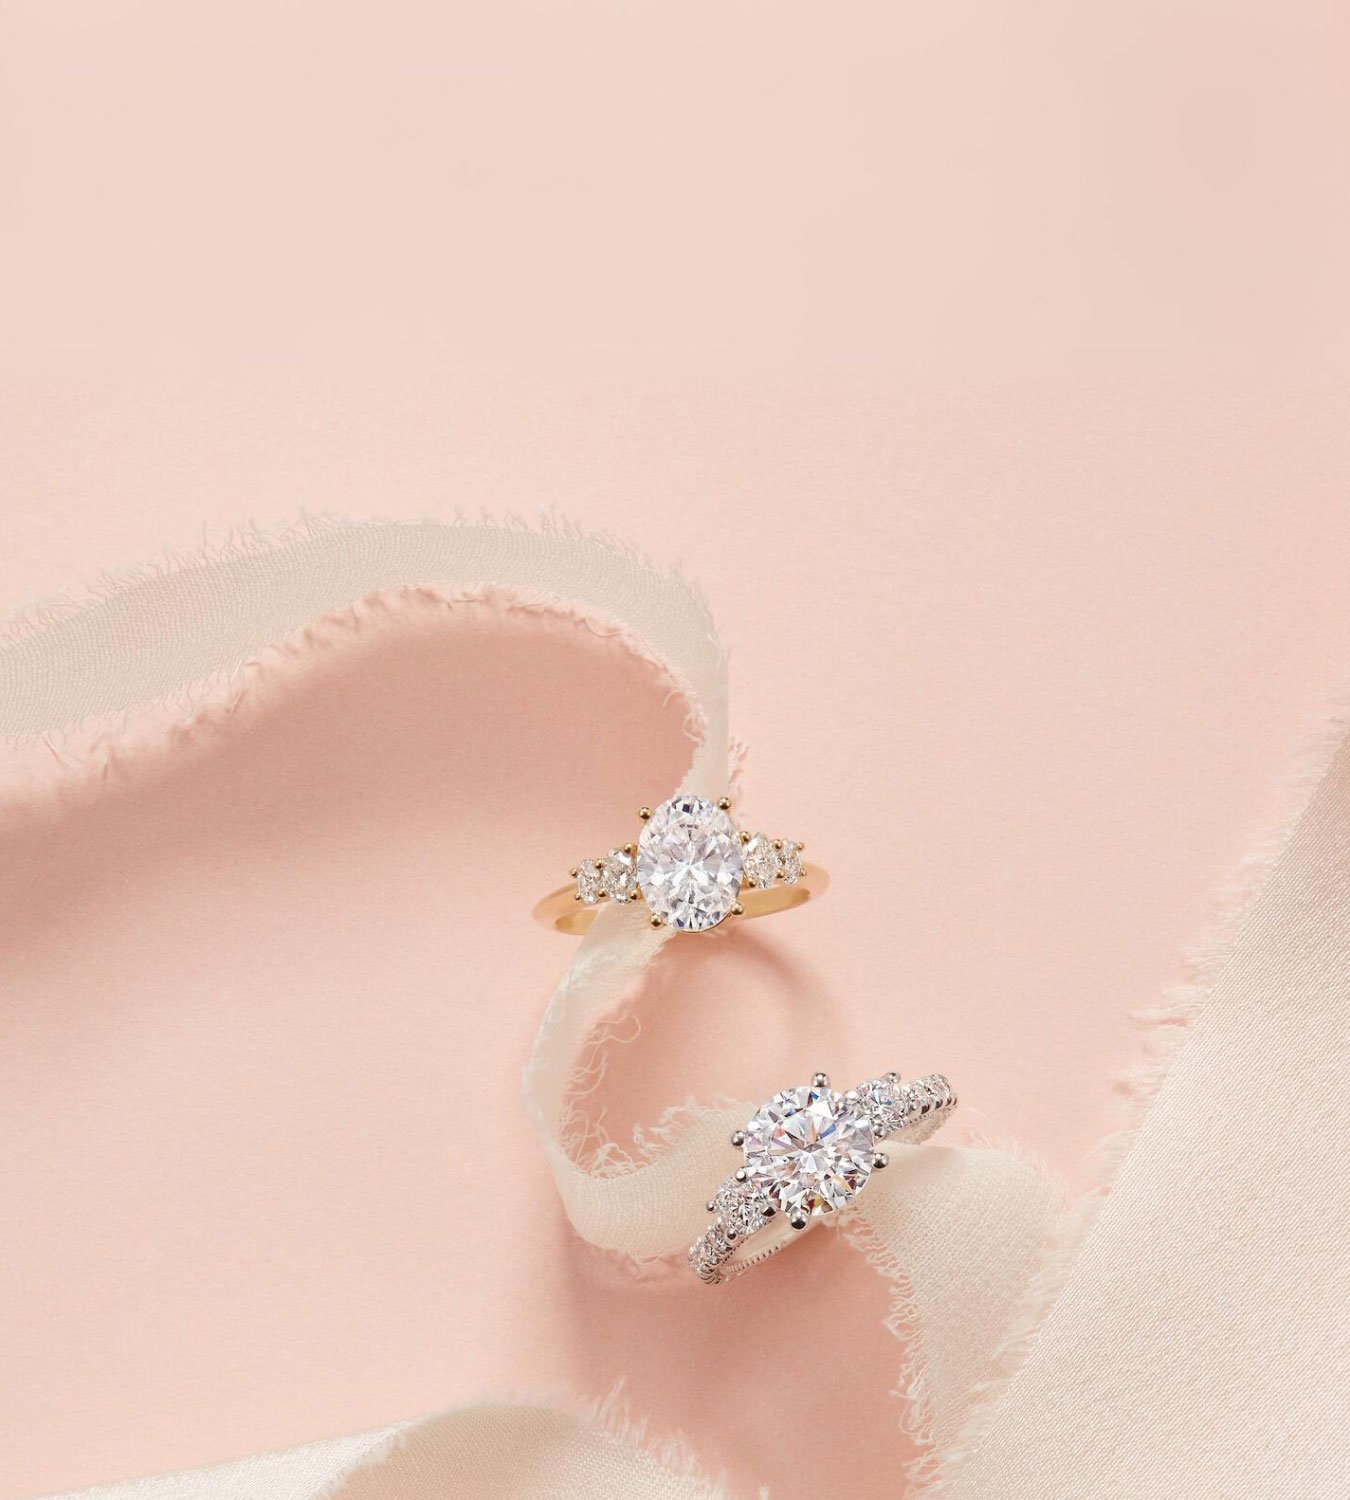 Buy quality Real diamond ladies Ring in Ahmedabad